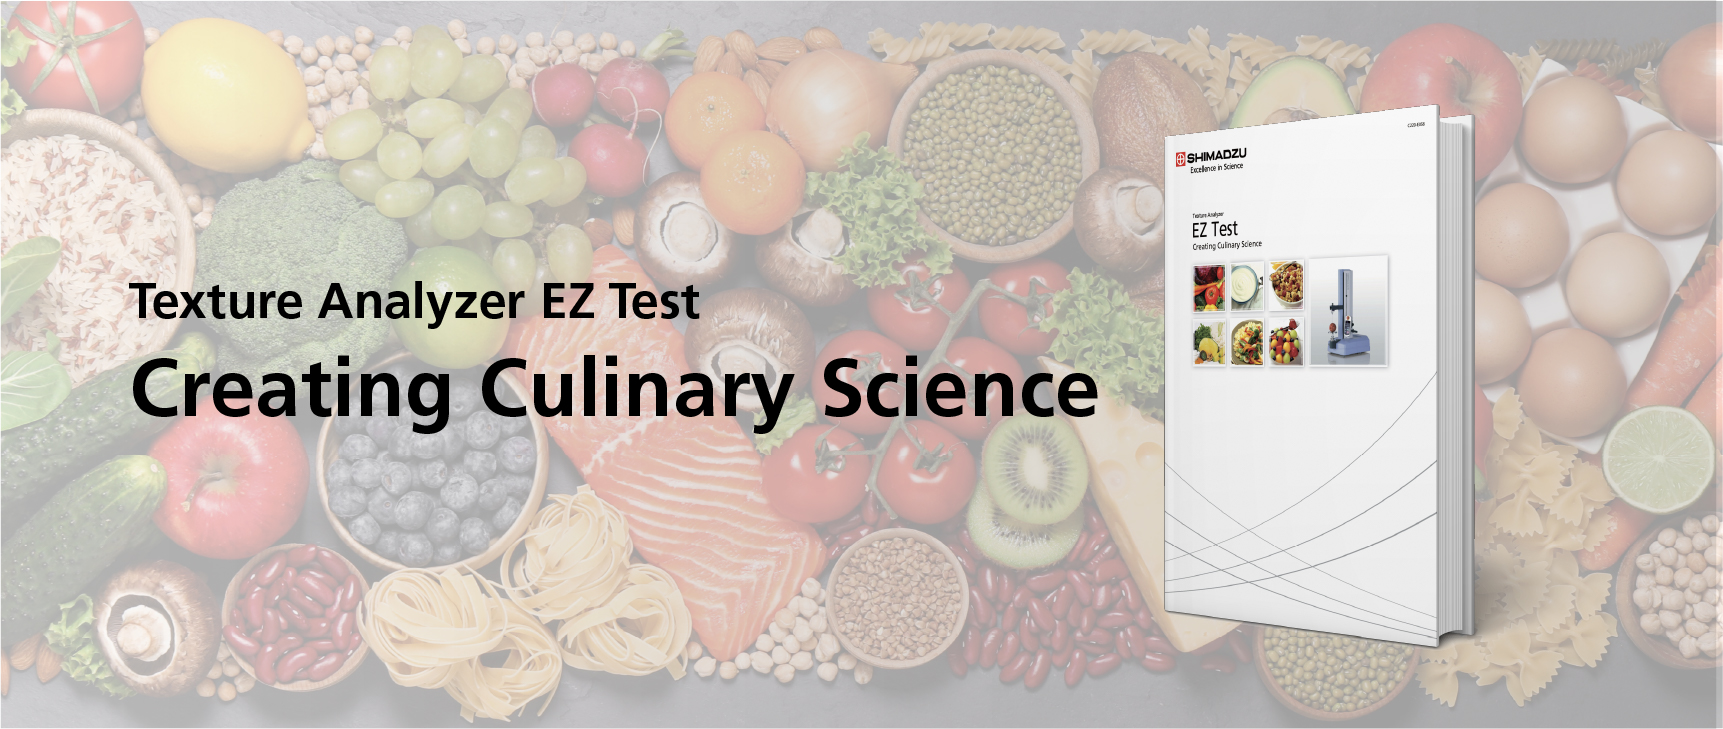 Texture Analyzer EZ TEST, Creating Culinary Science